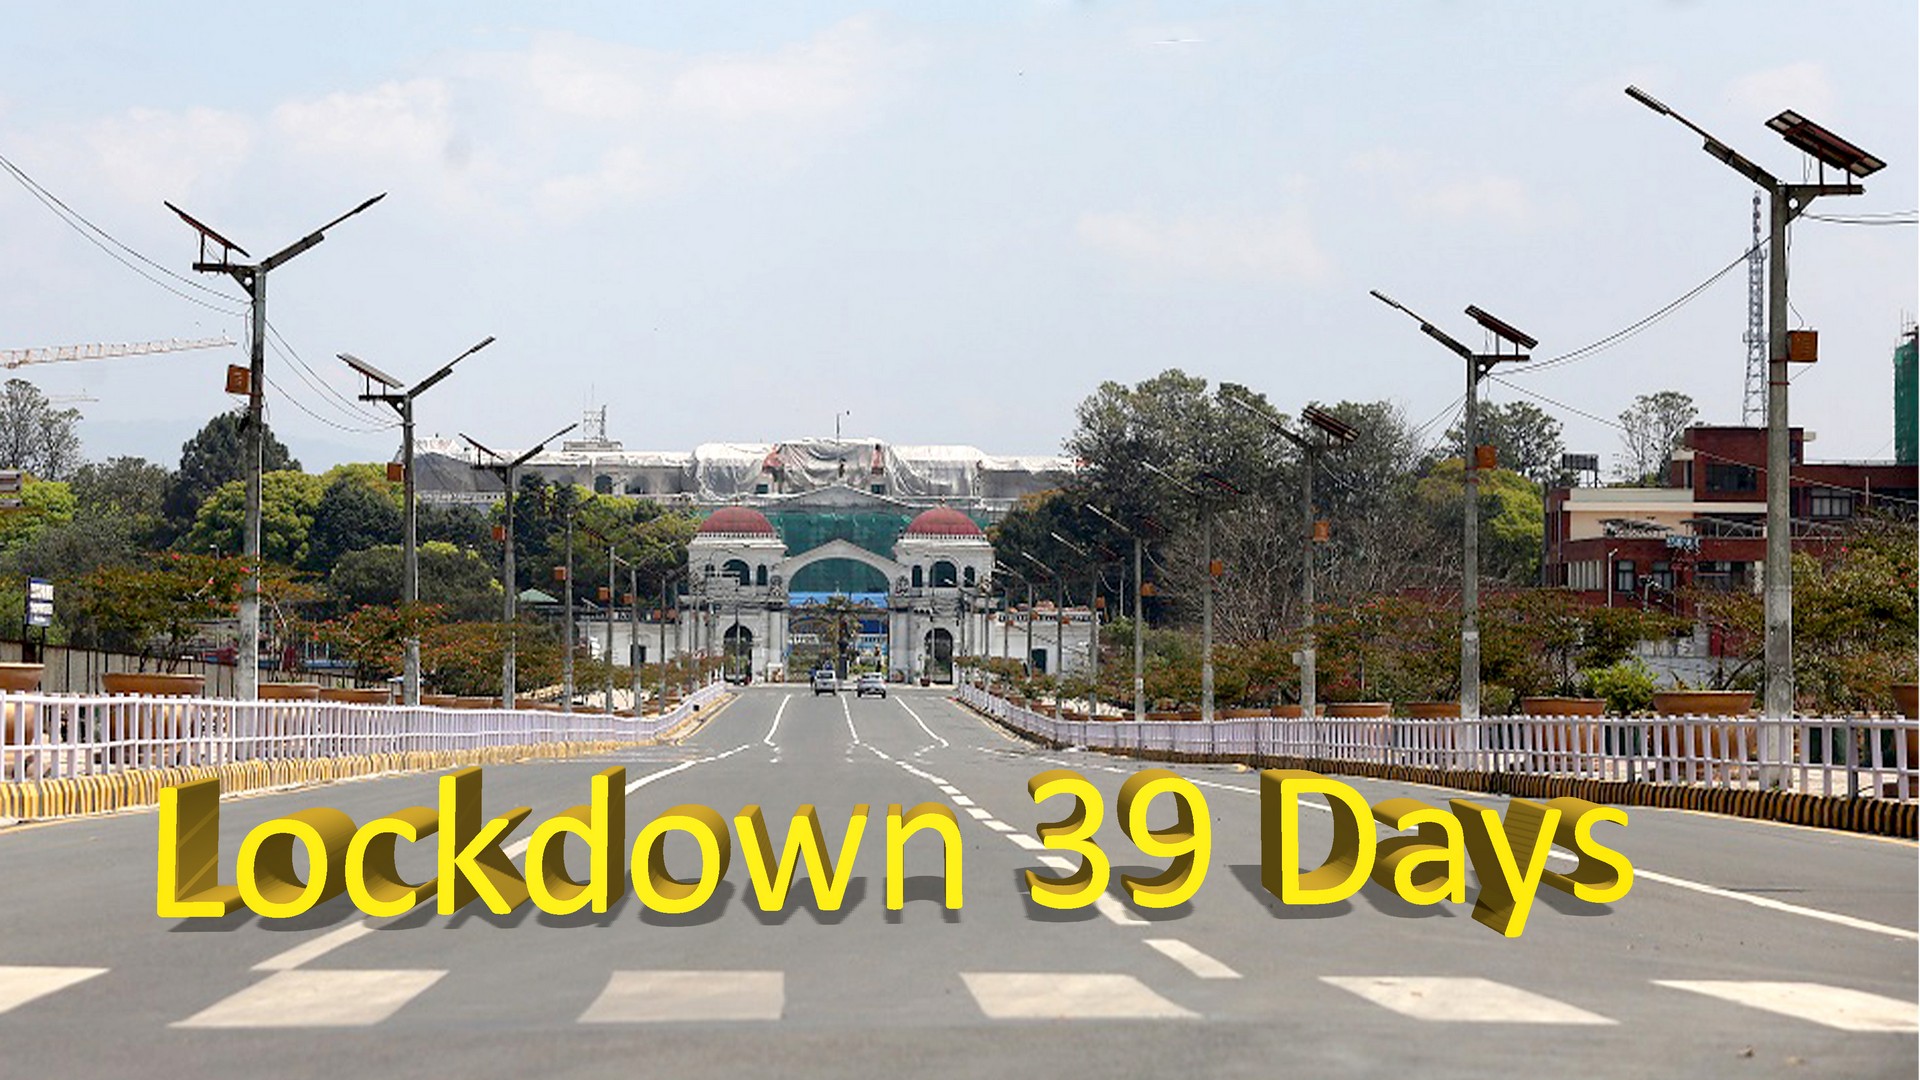 Lockdown 39 days